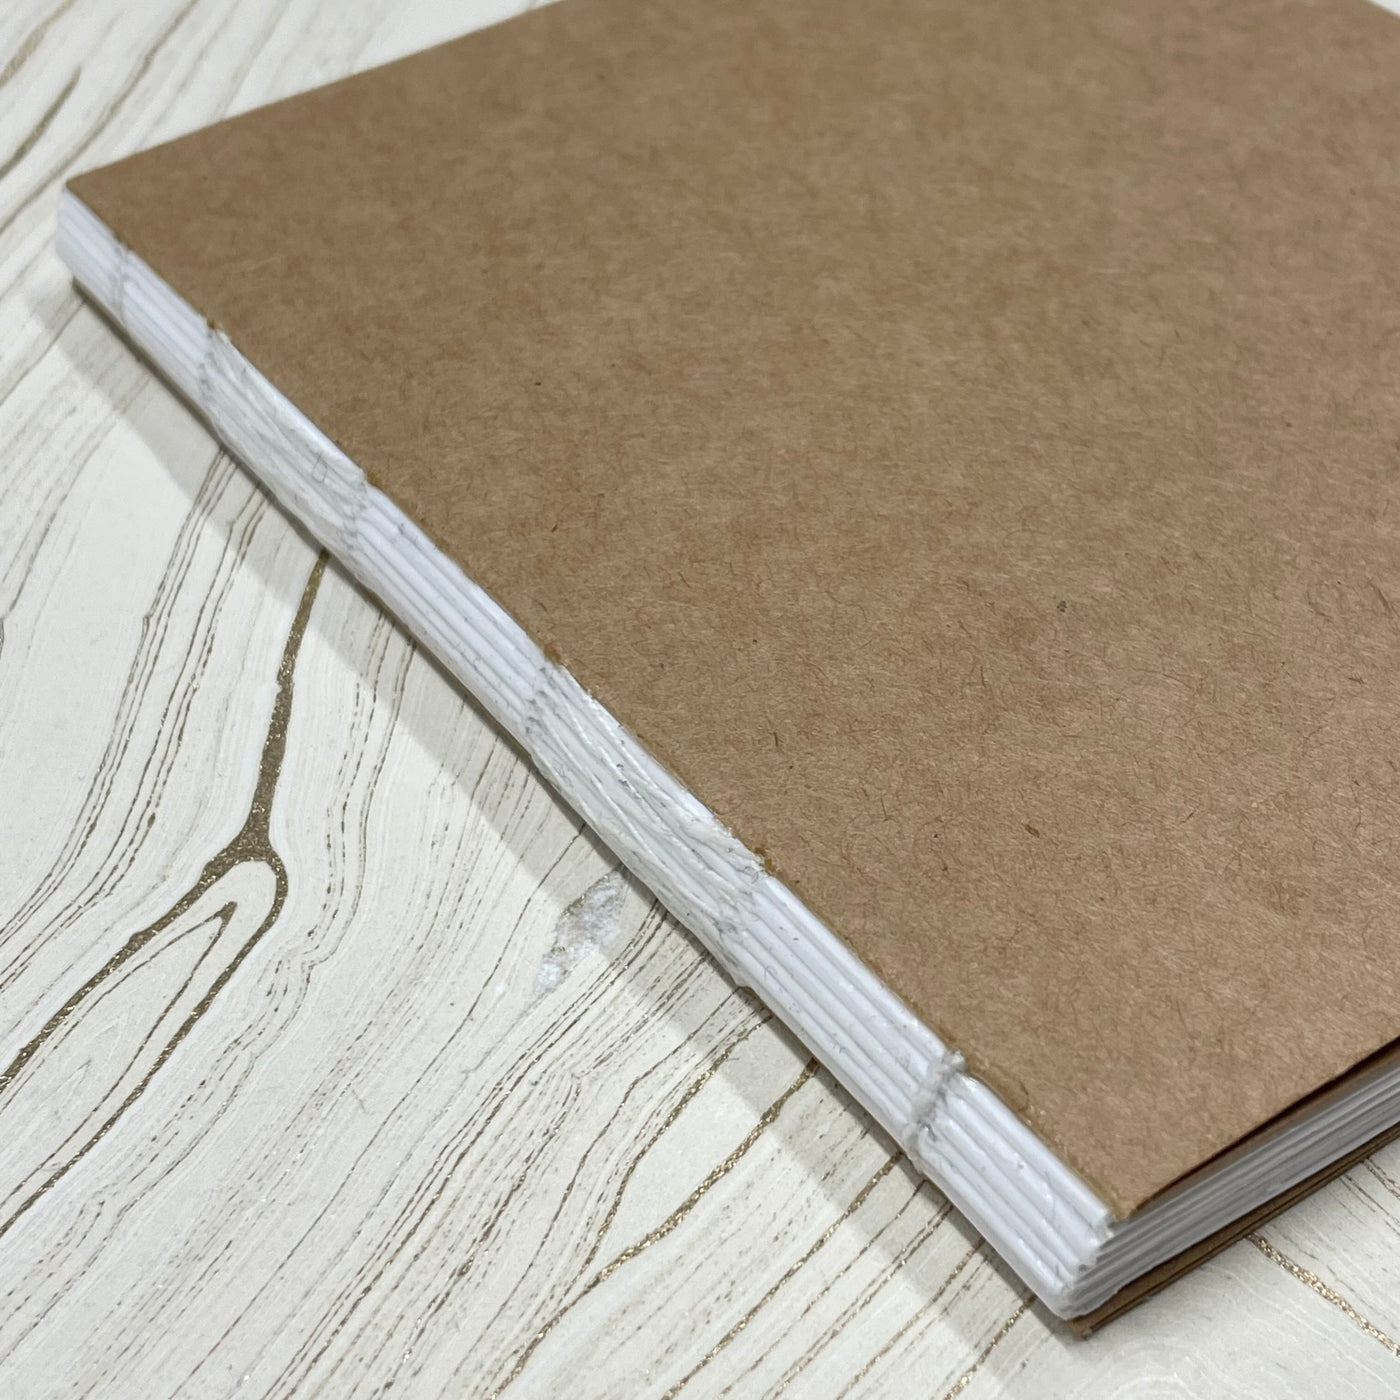 Medium Flexible Notebook